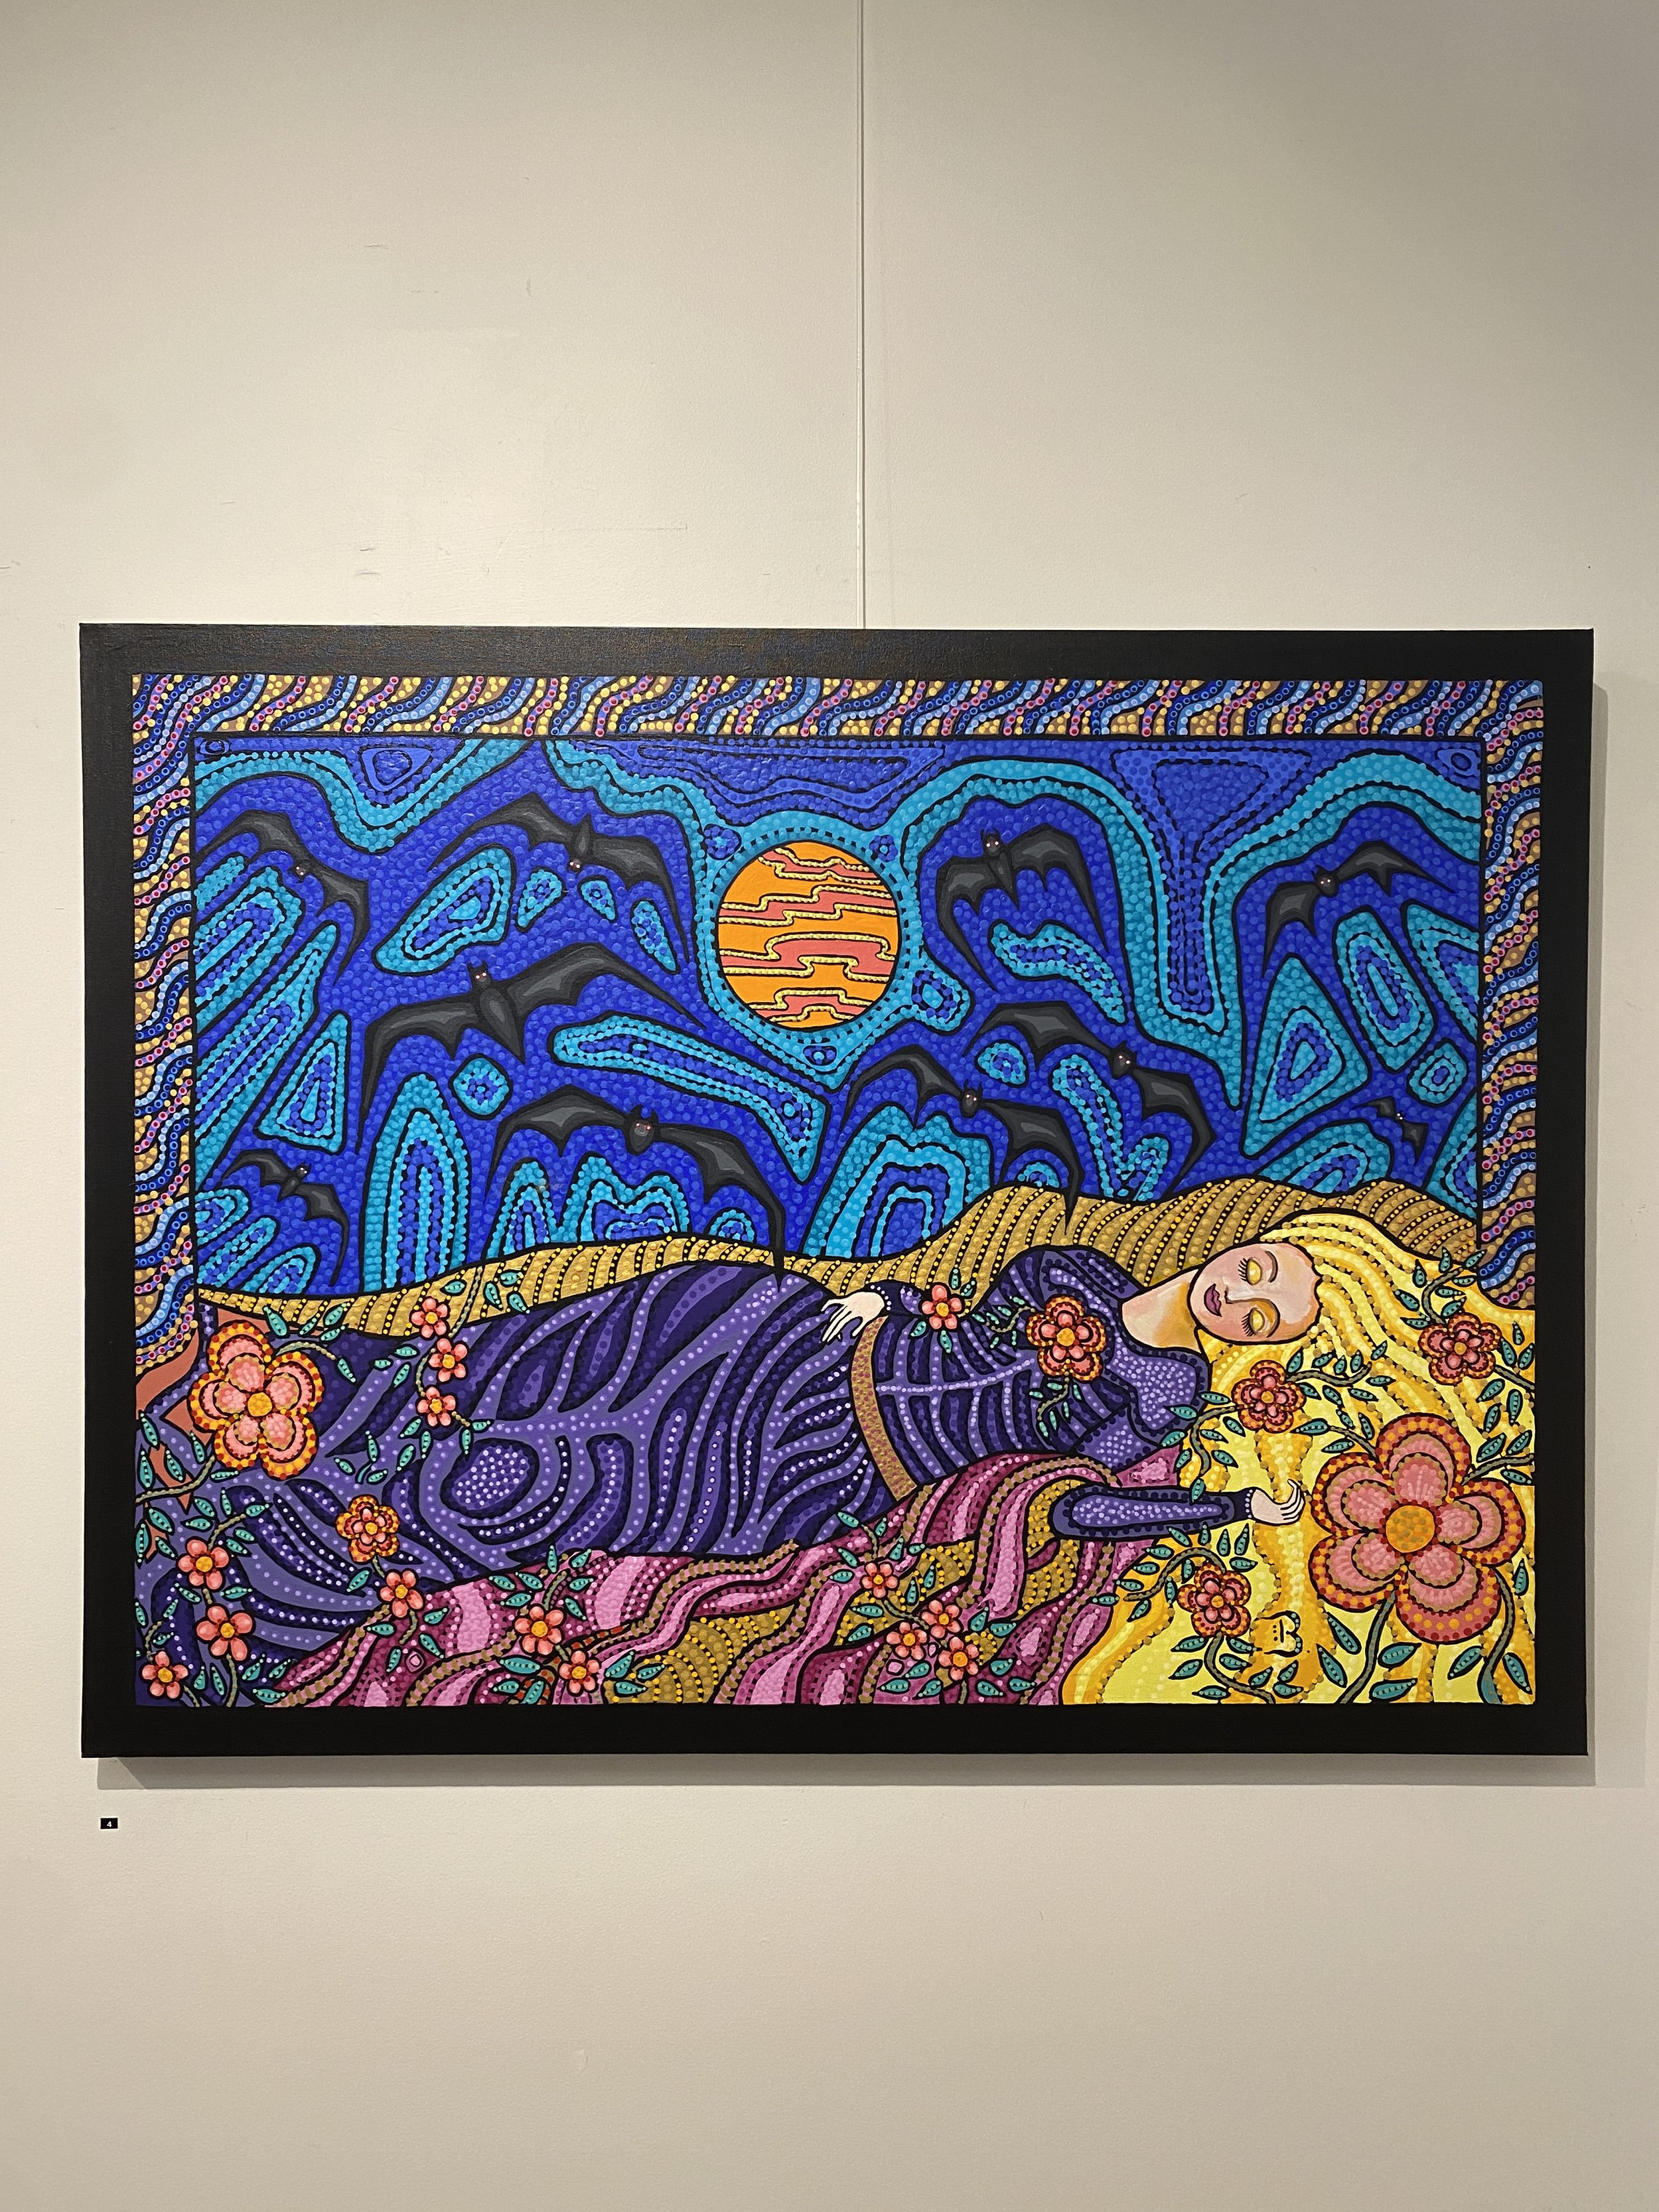 4. Sleeping Beauty | 122x91cm, $650